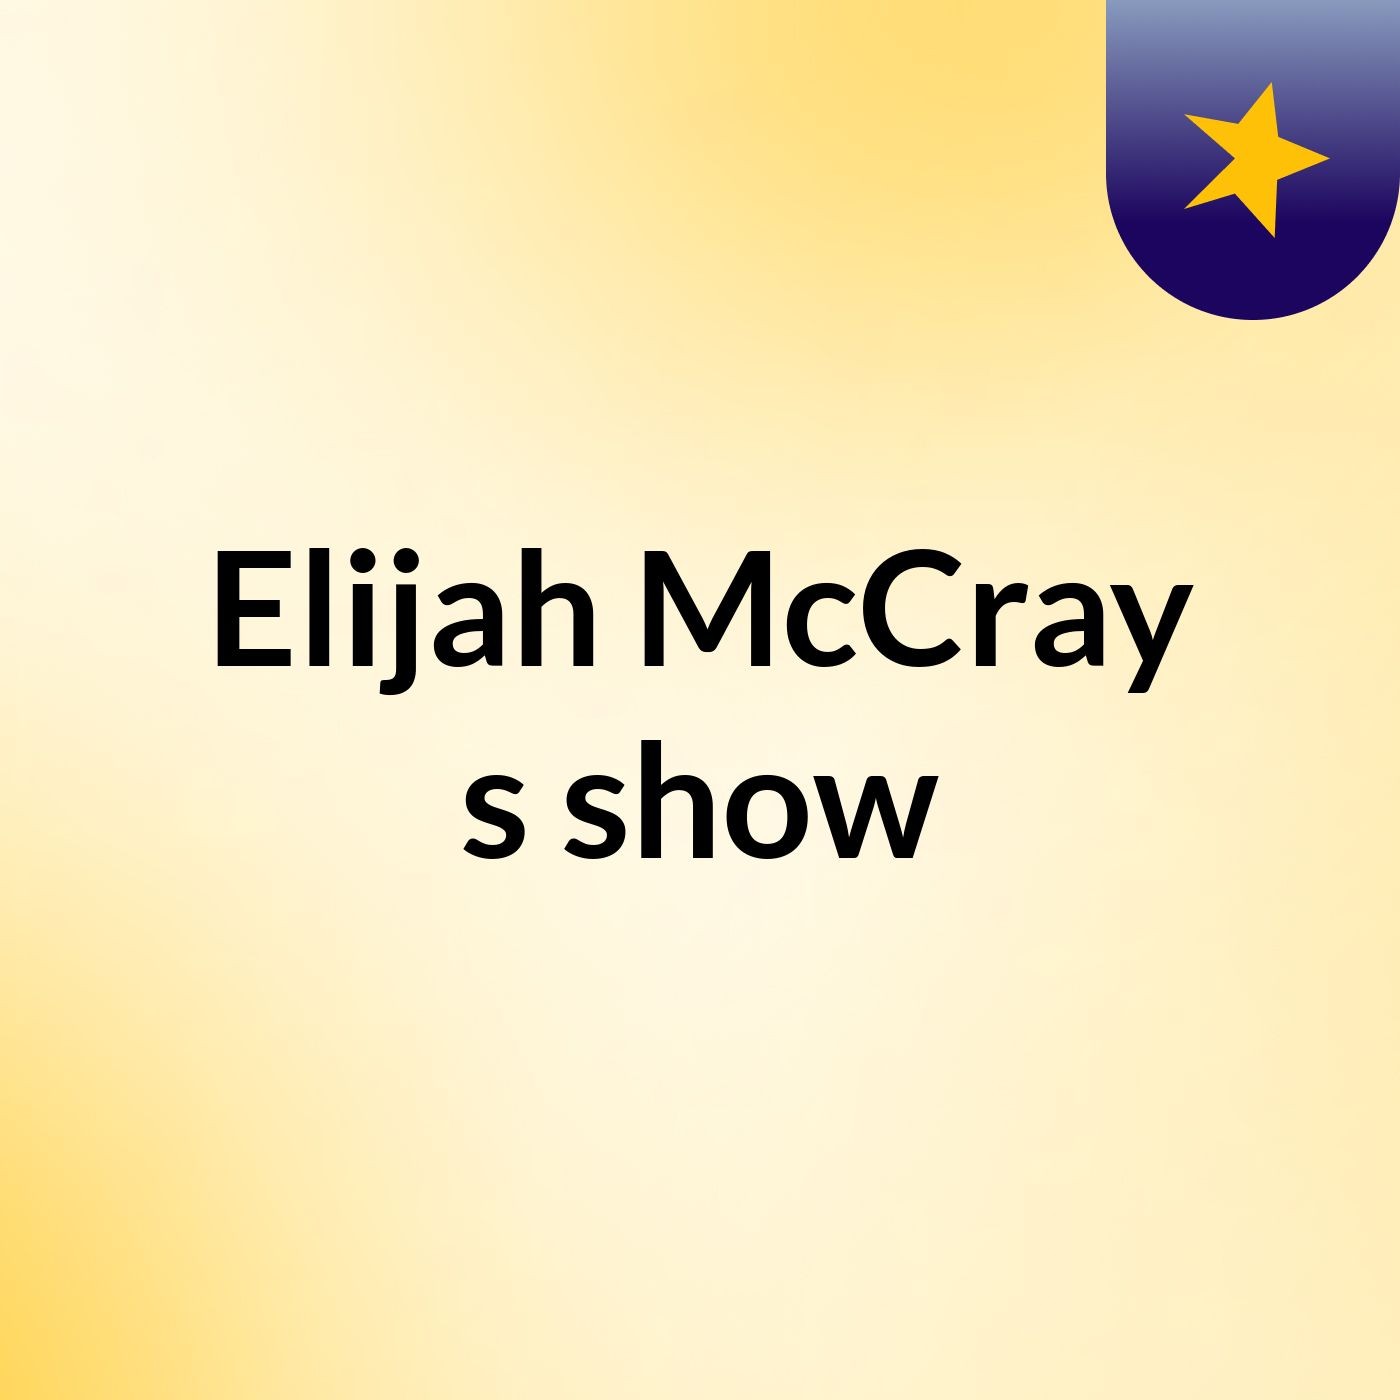 Episode 4 - Elijah McCray's show